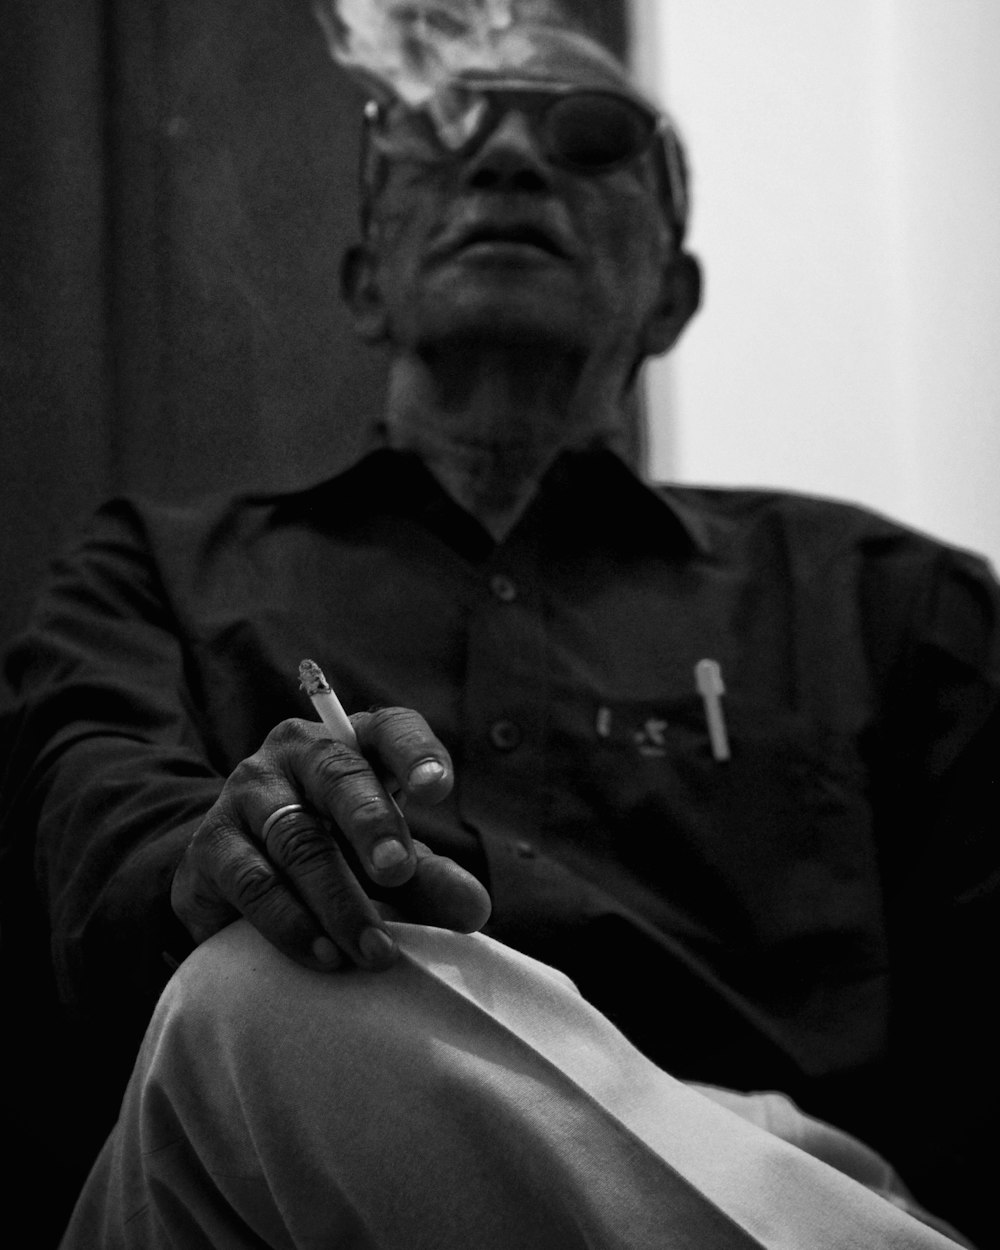 grayscale photo of man smoking cigarette